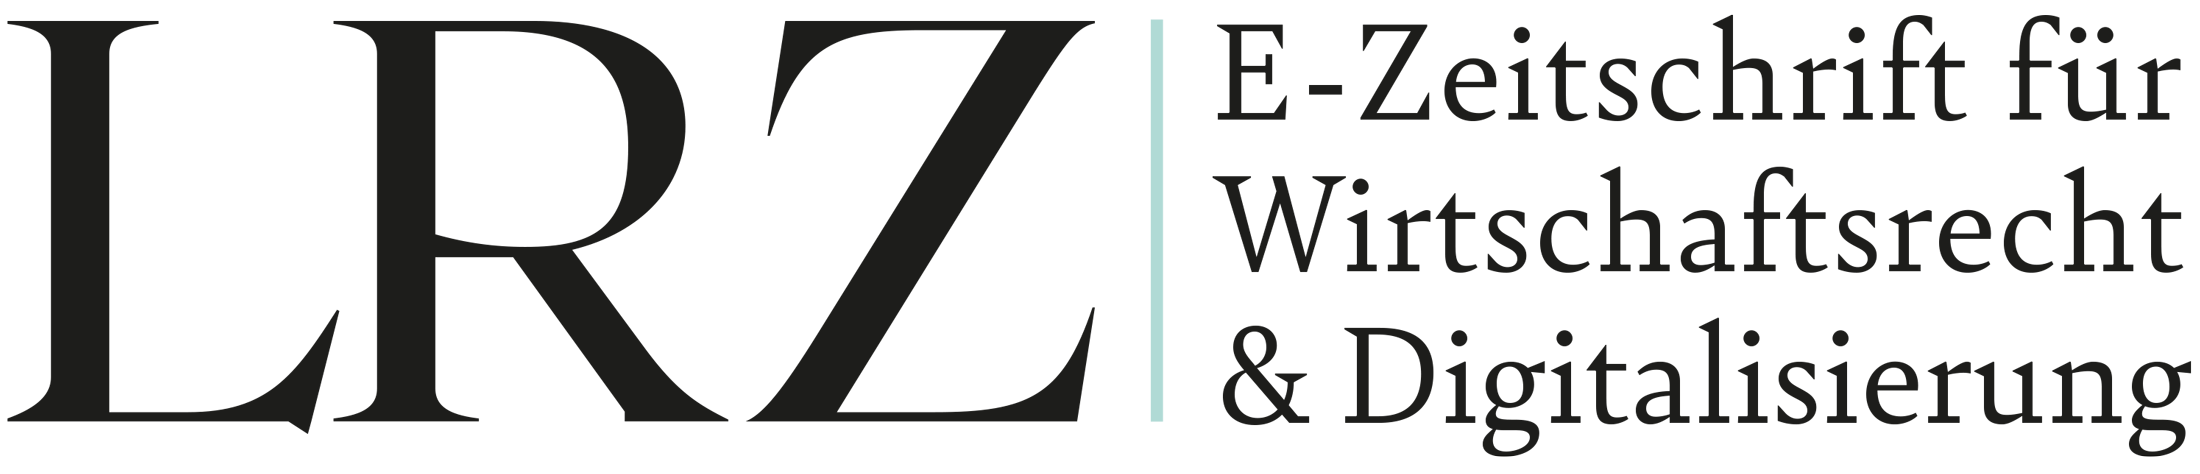 LRZ E Zeitschrift Logo